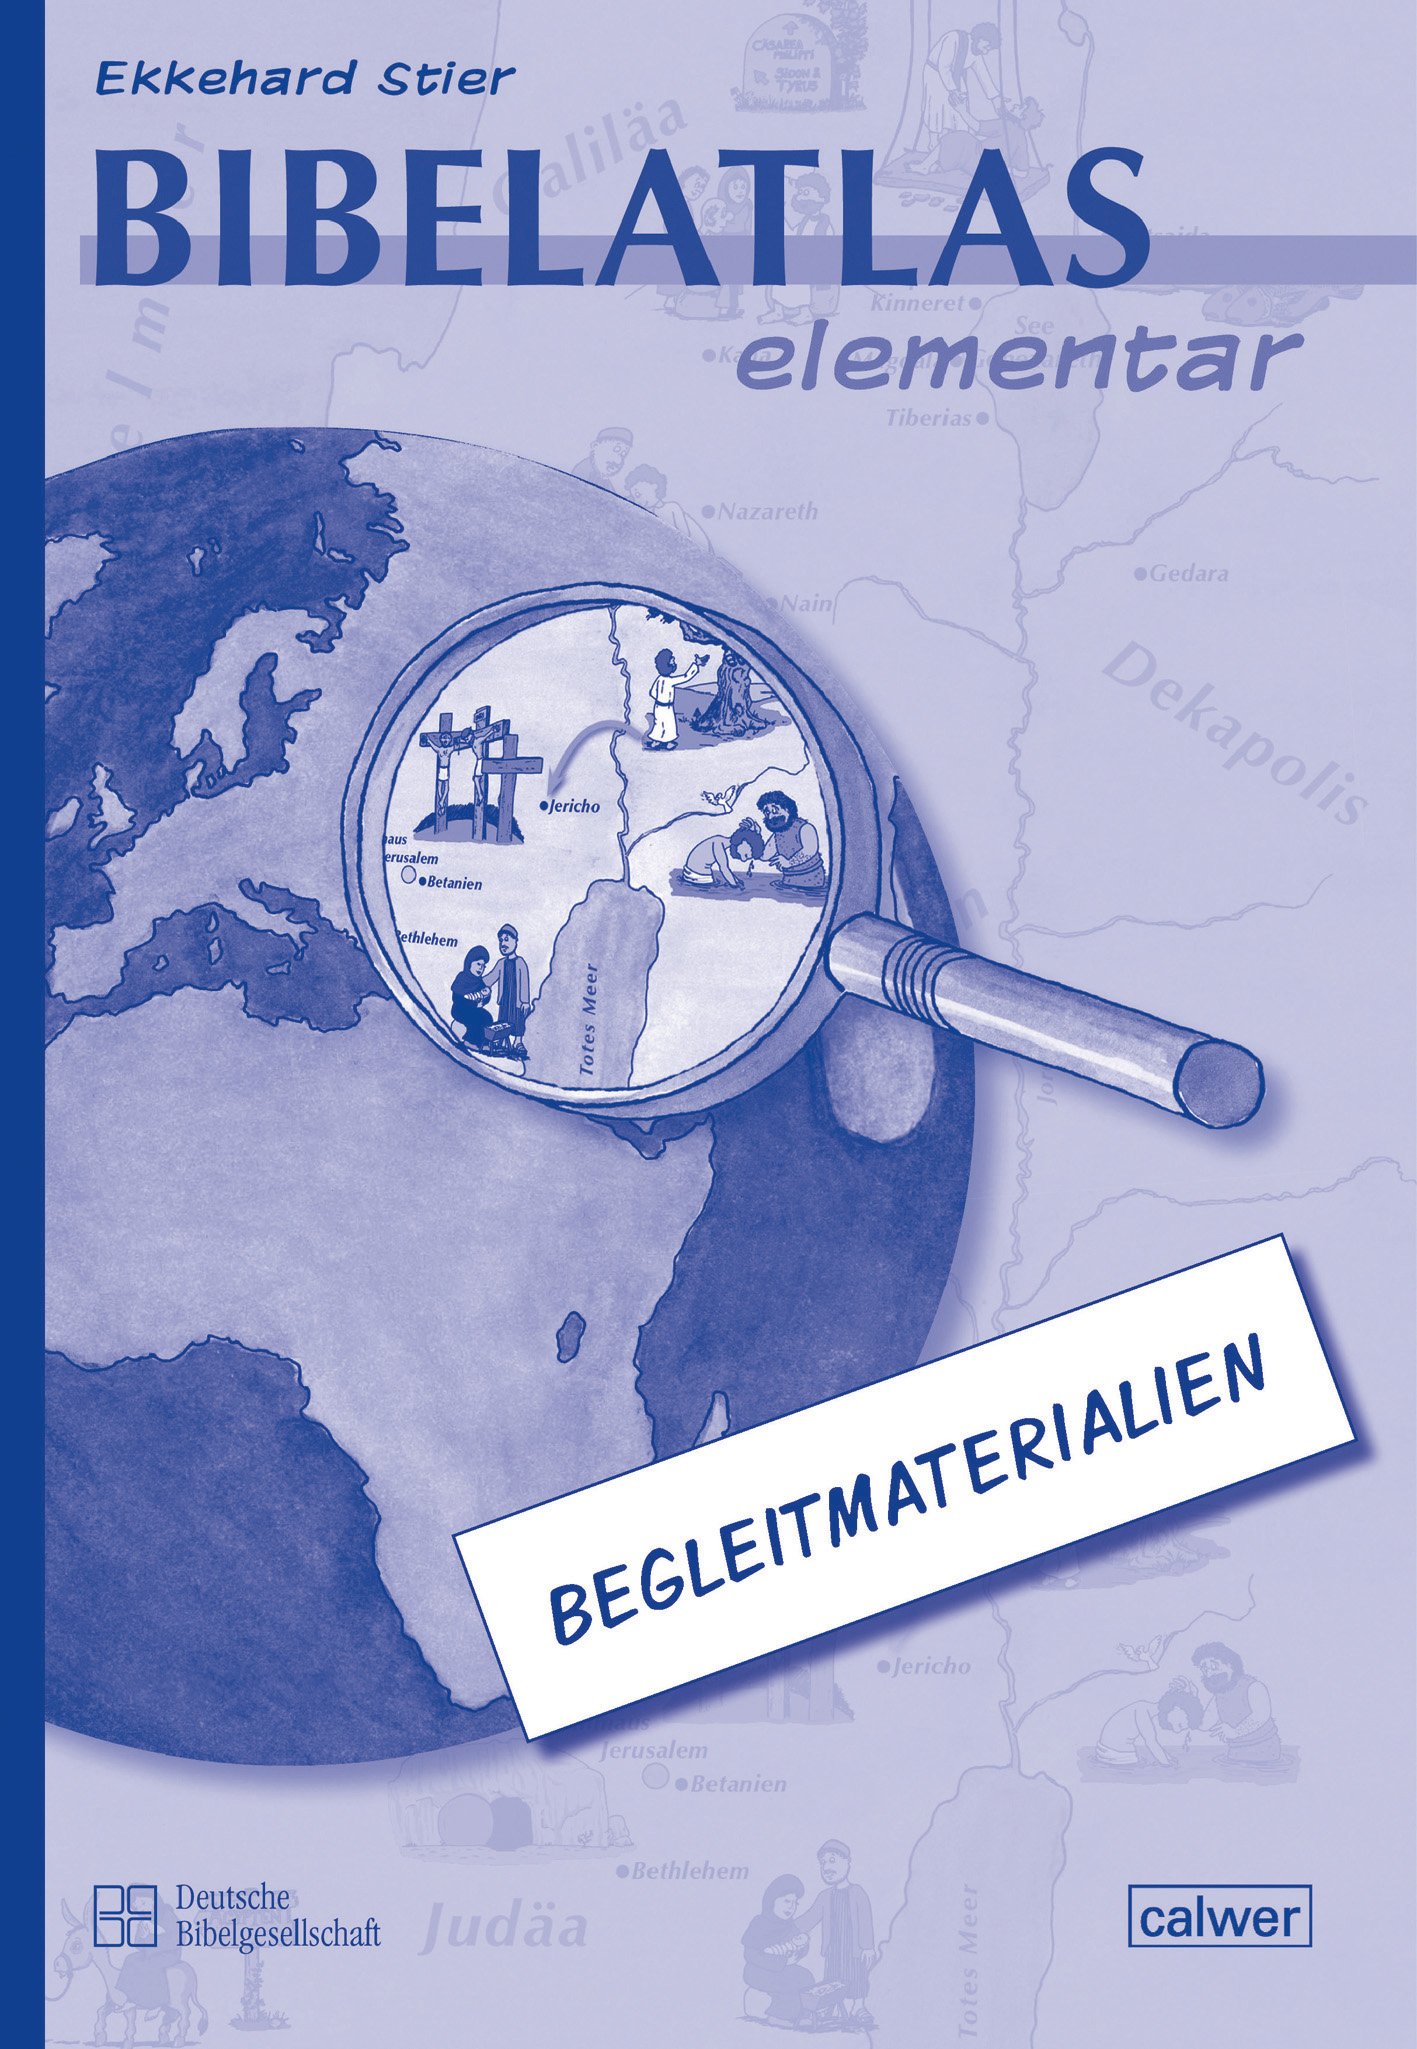 Bibelatlas elementar - Begleitmaterialien - Cover